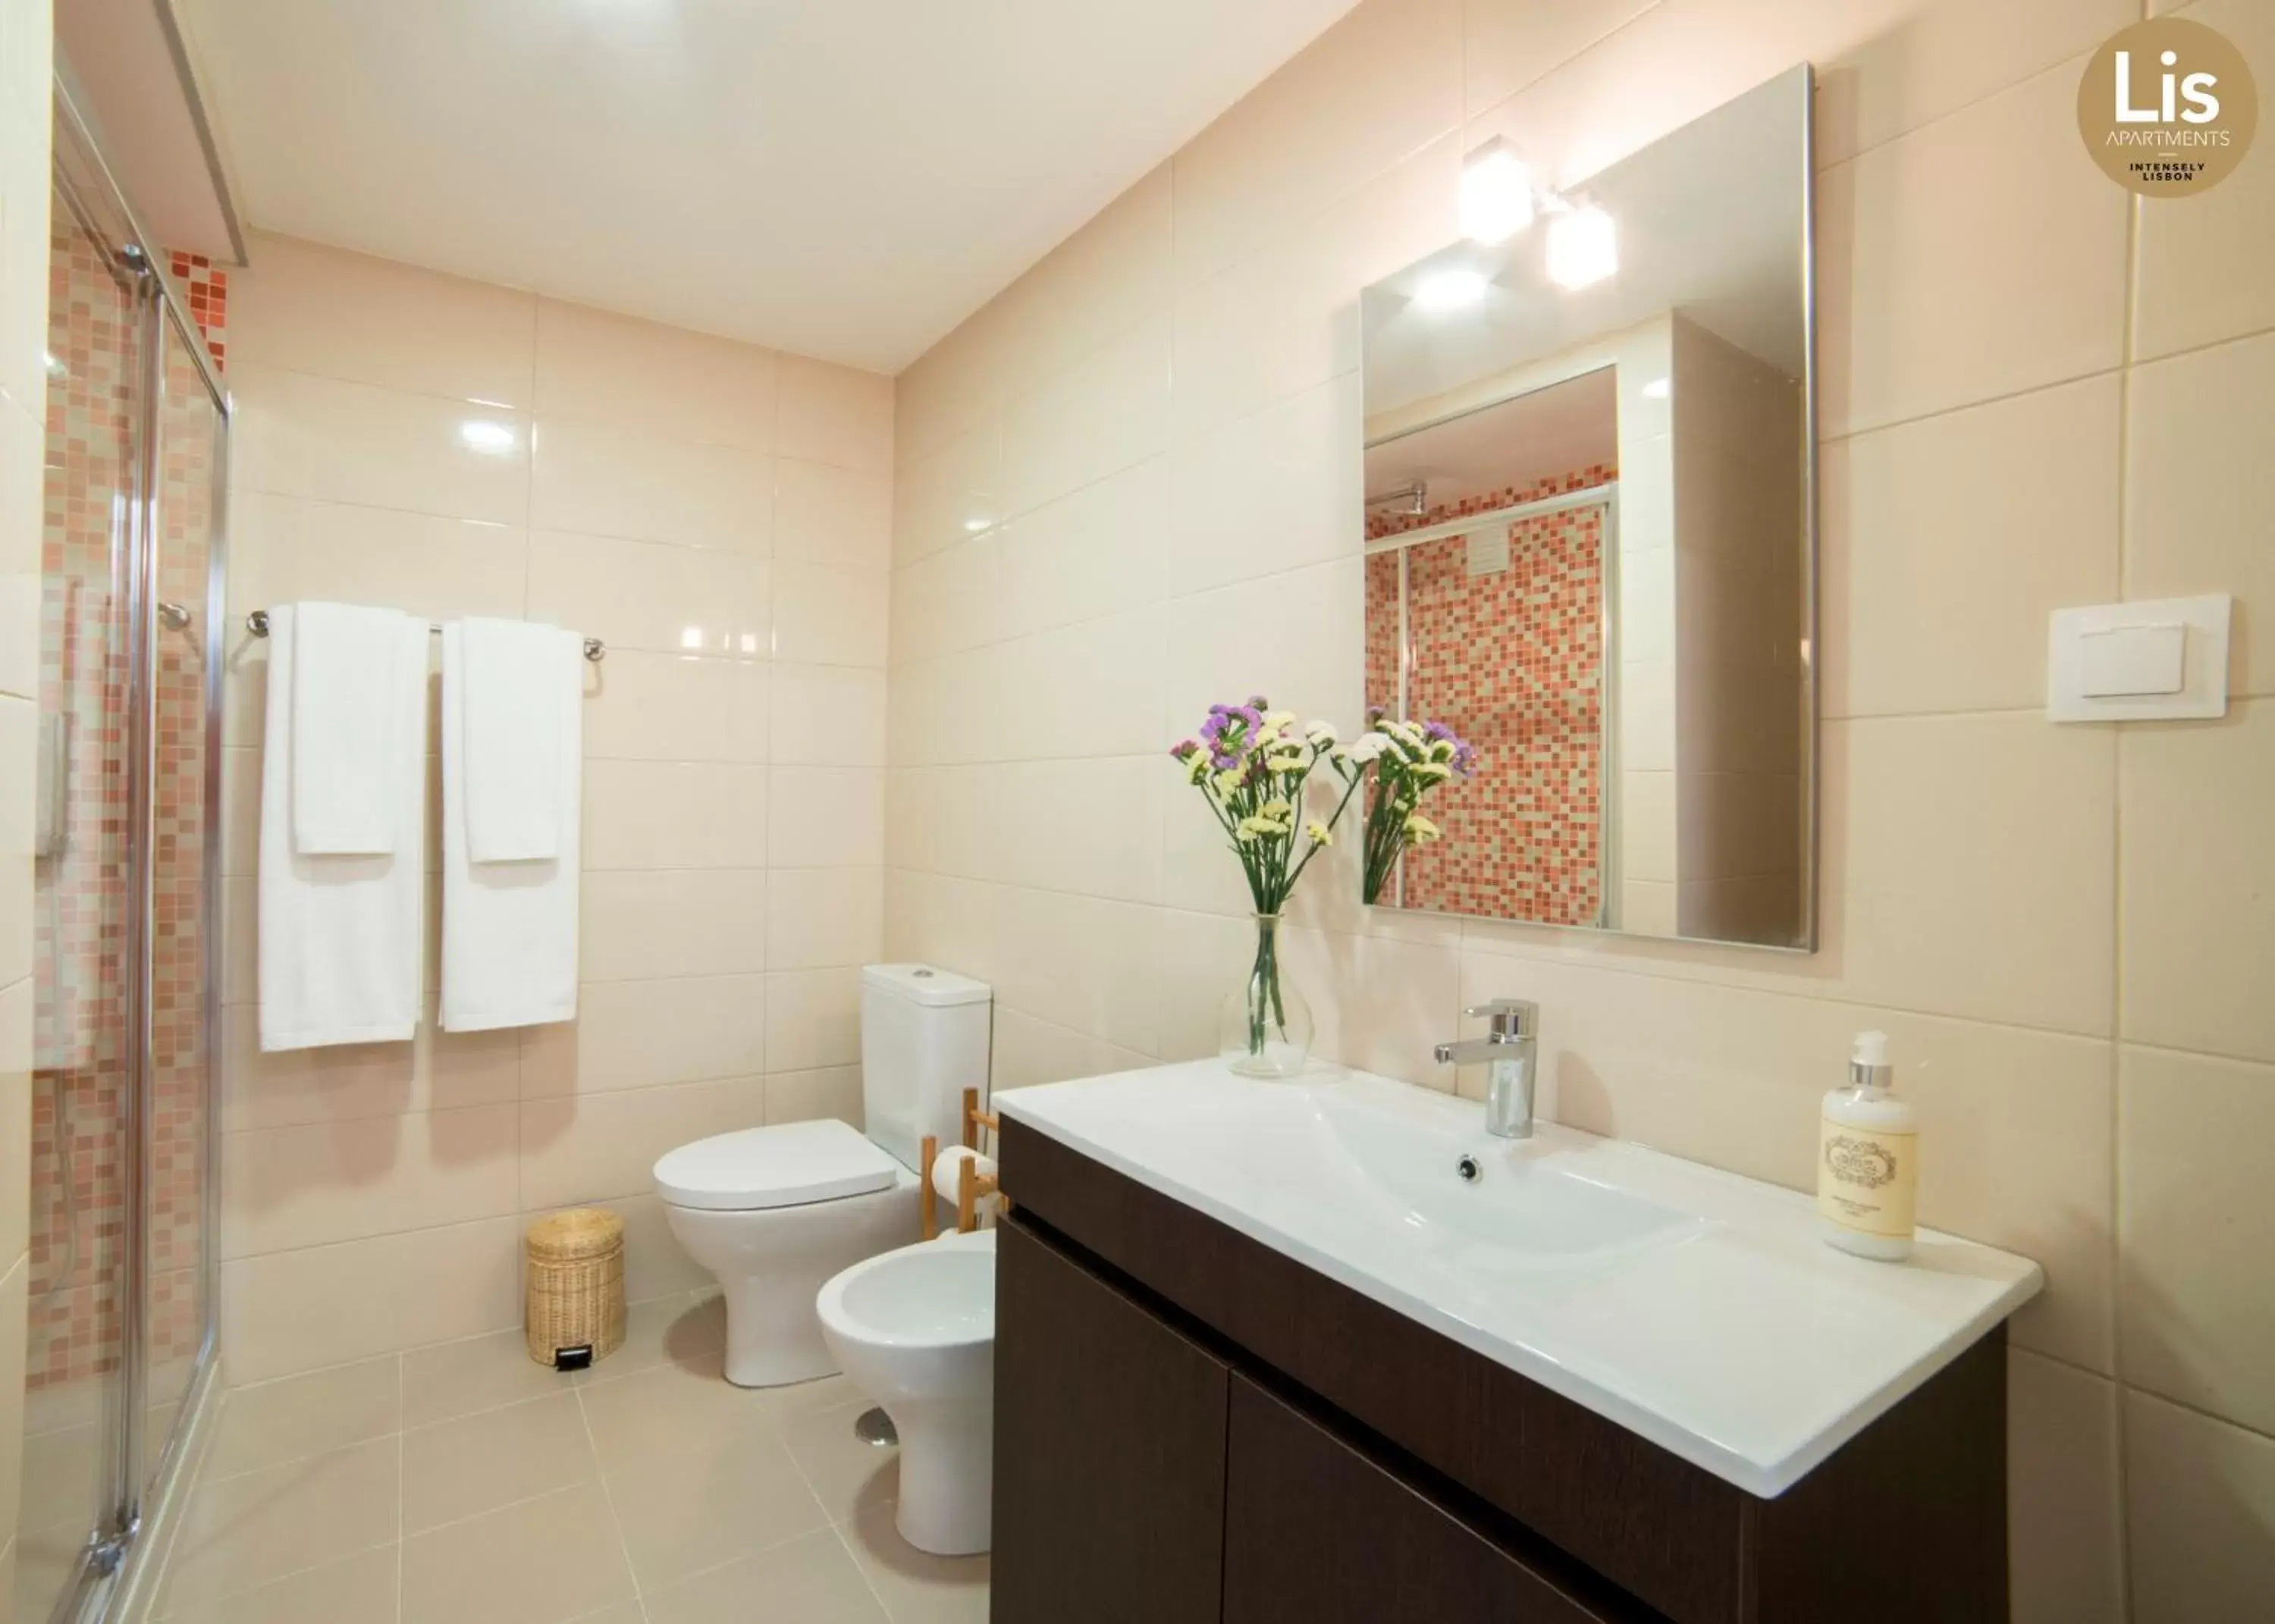 Toilet, Bathroom in Lis Apartments